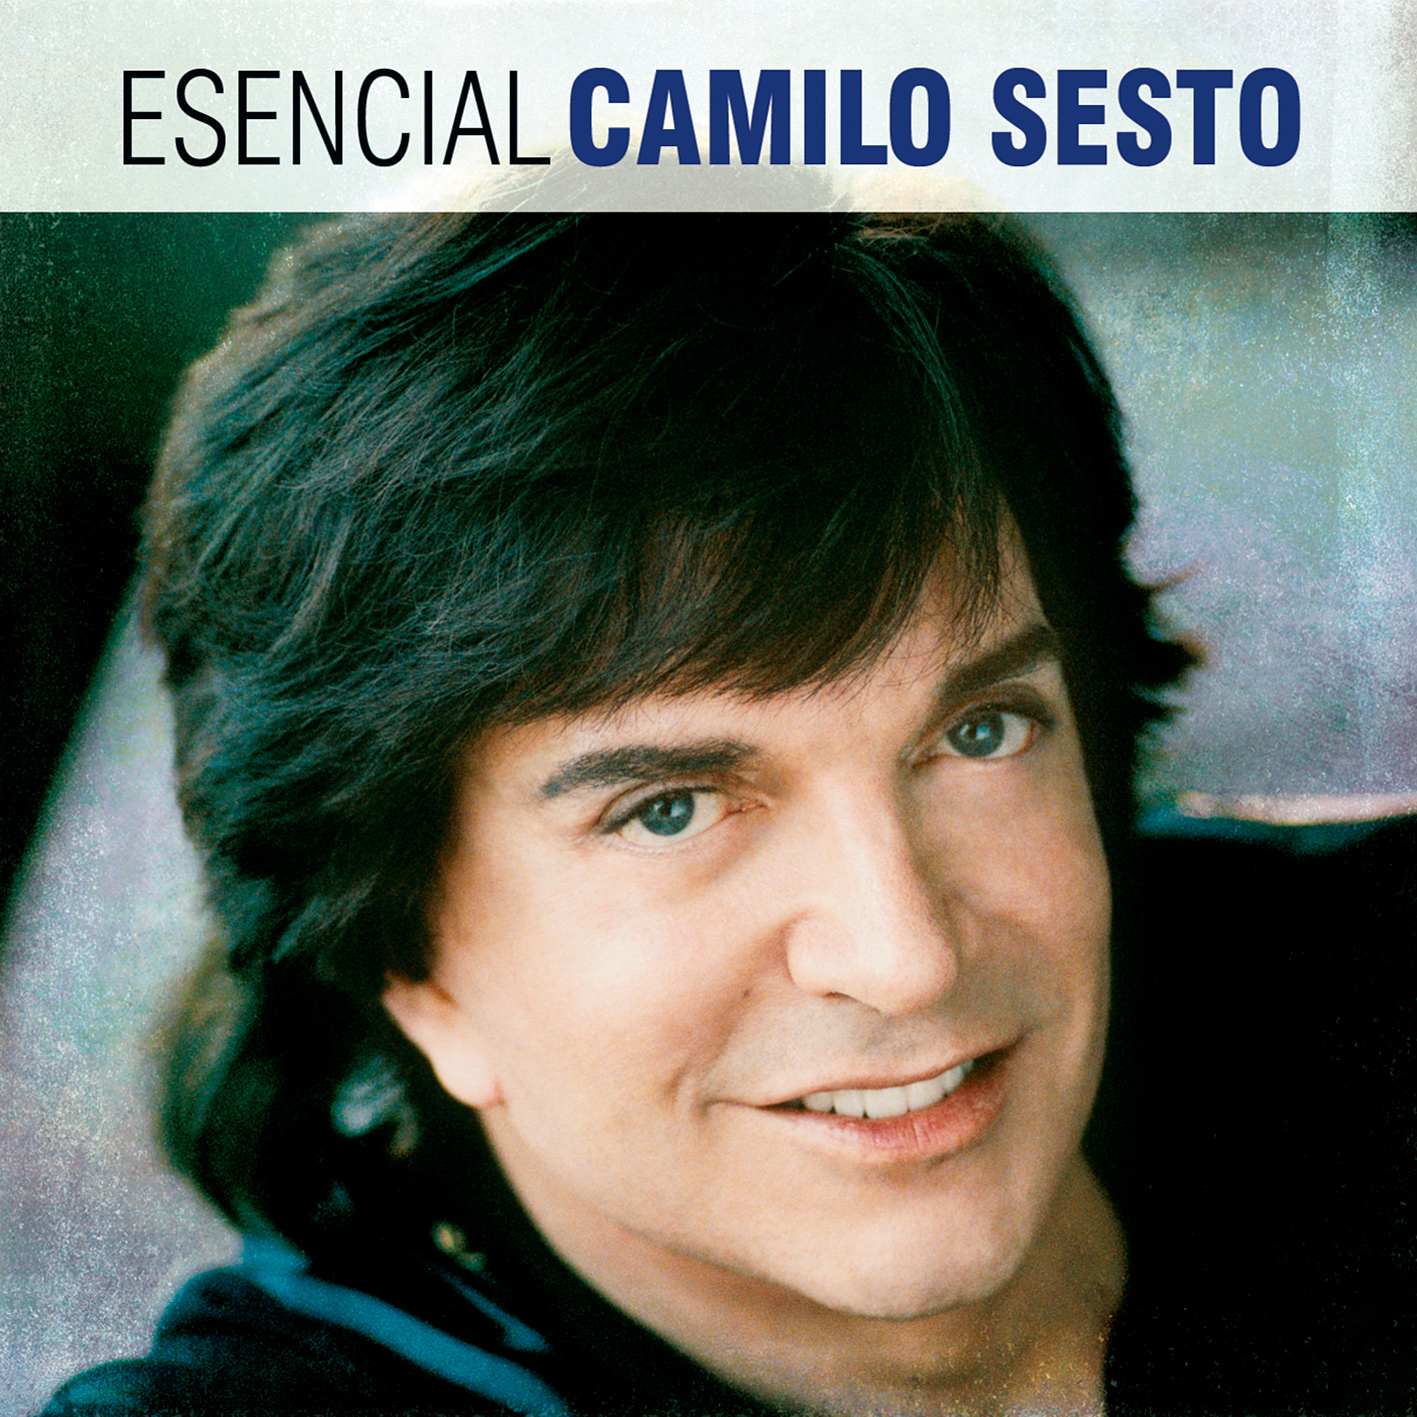 Camilo Sesto - Esencial Camilo Sesto (2013) [HDTracks FLAC 24bit/44,1kHz]